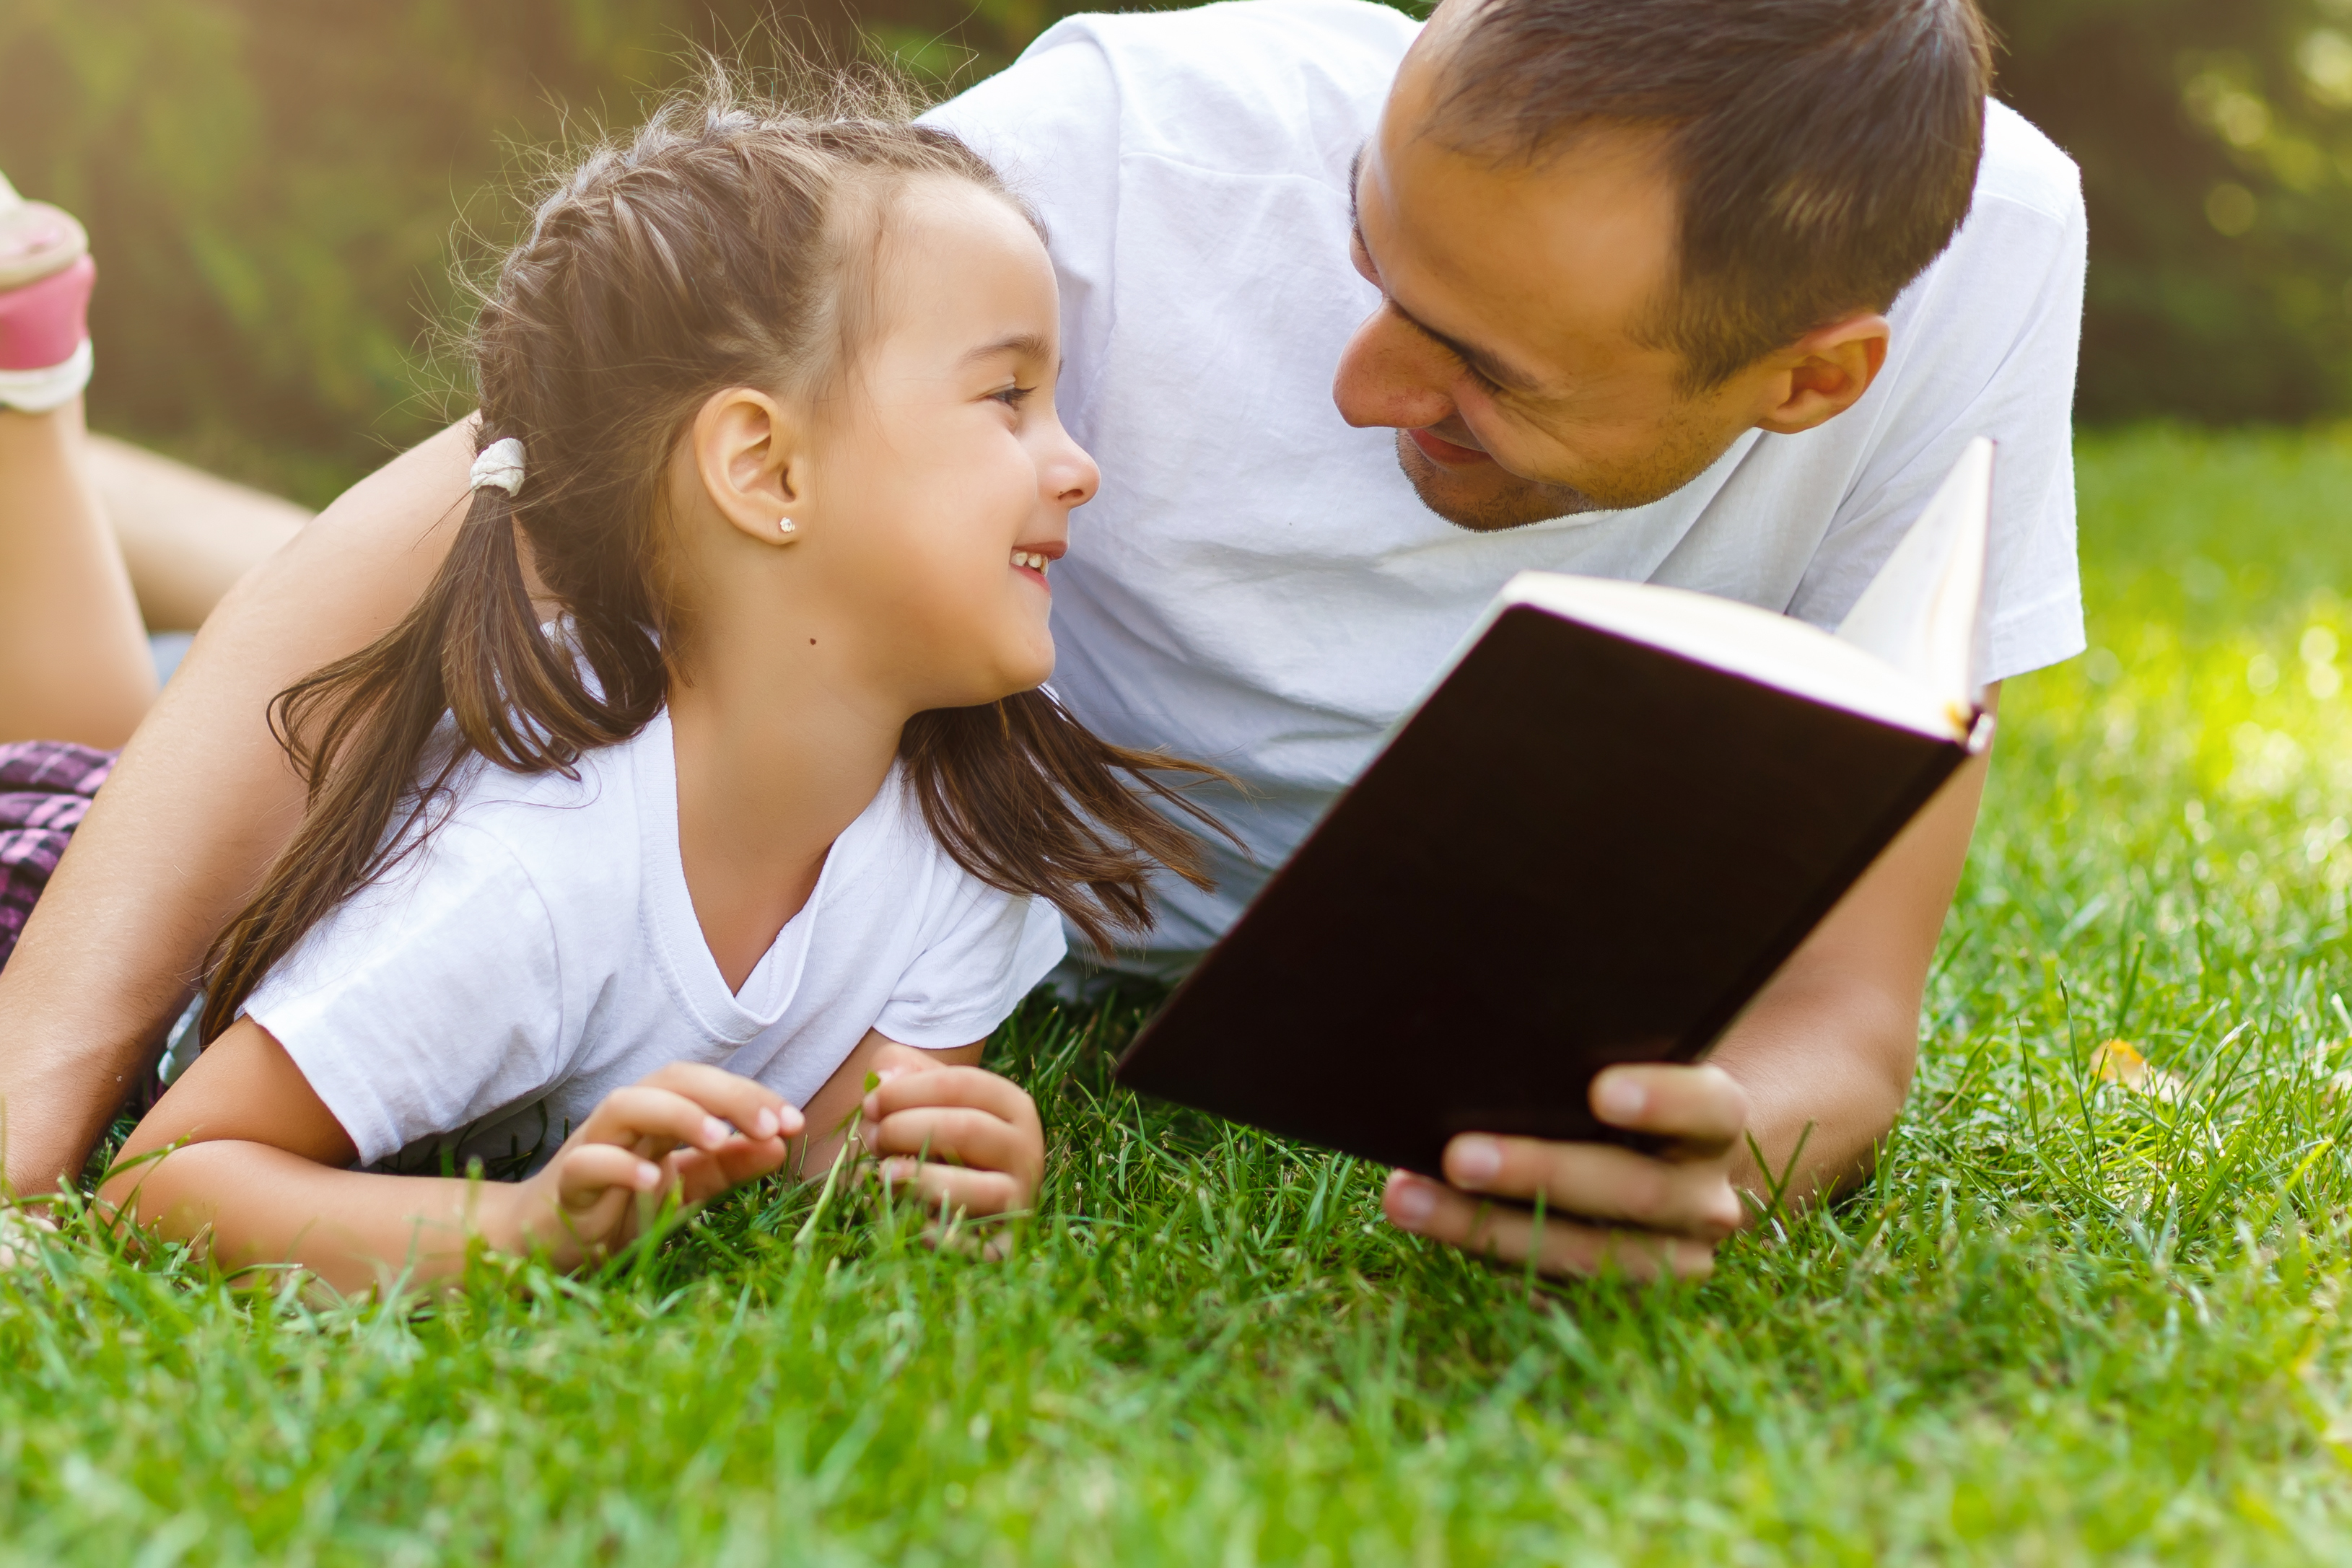 Summer Scripture Challenge for Families